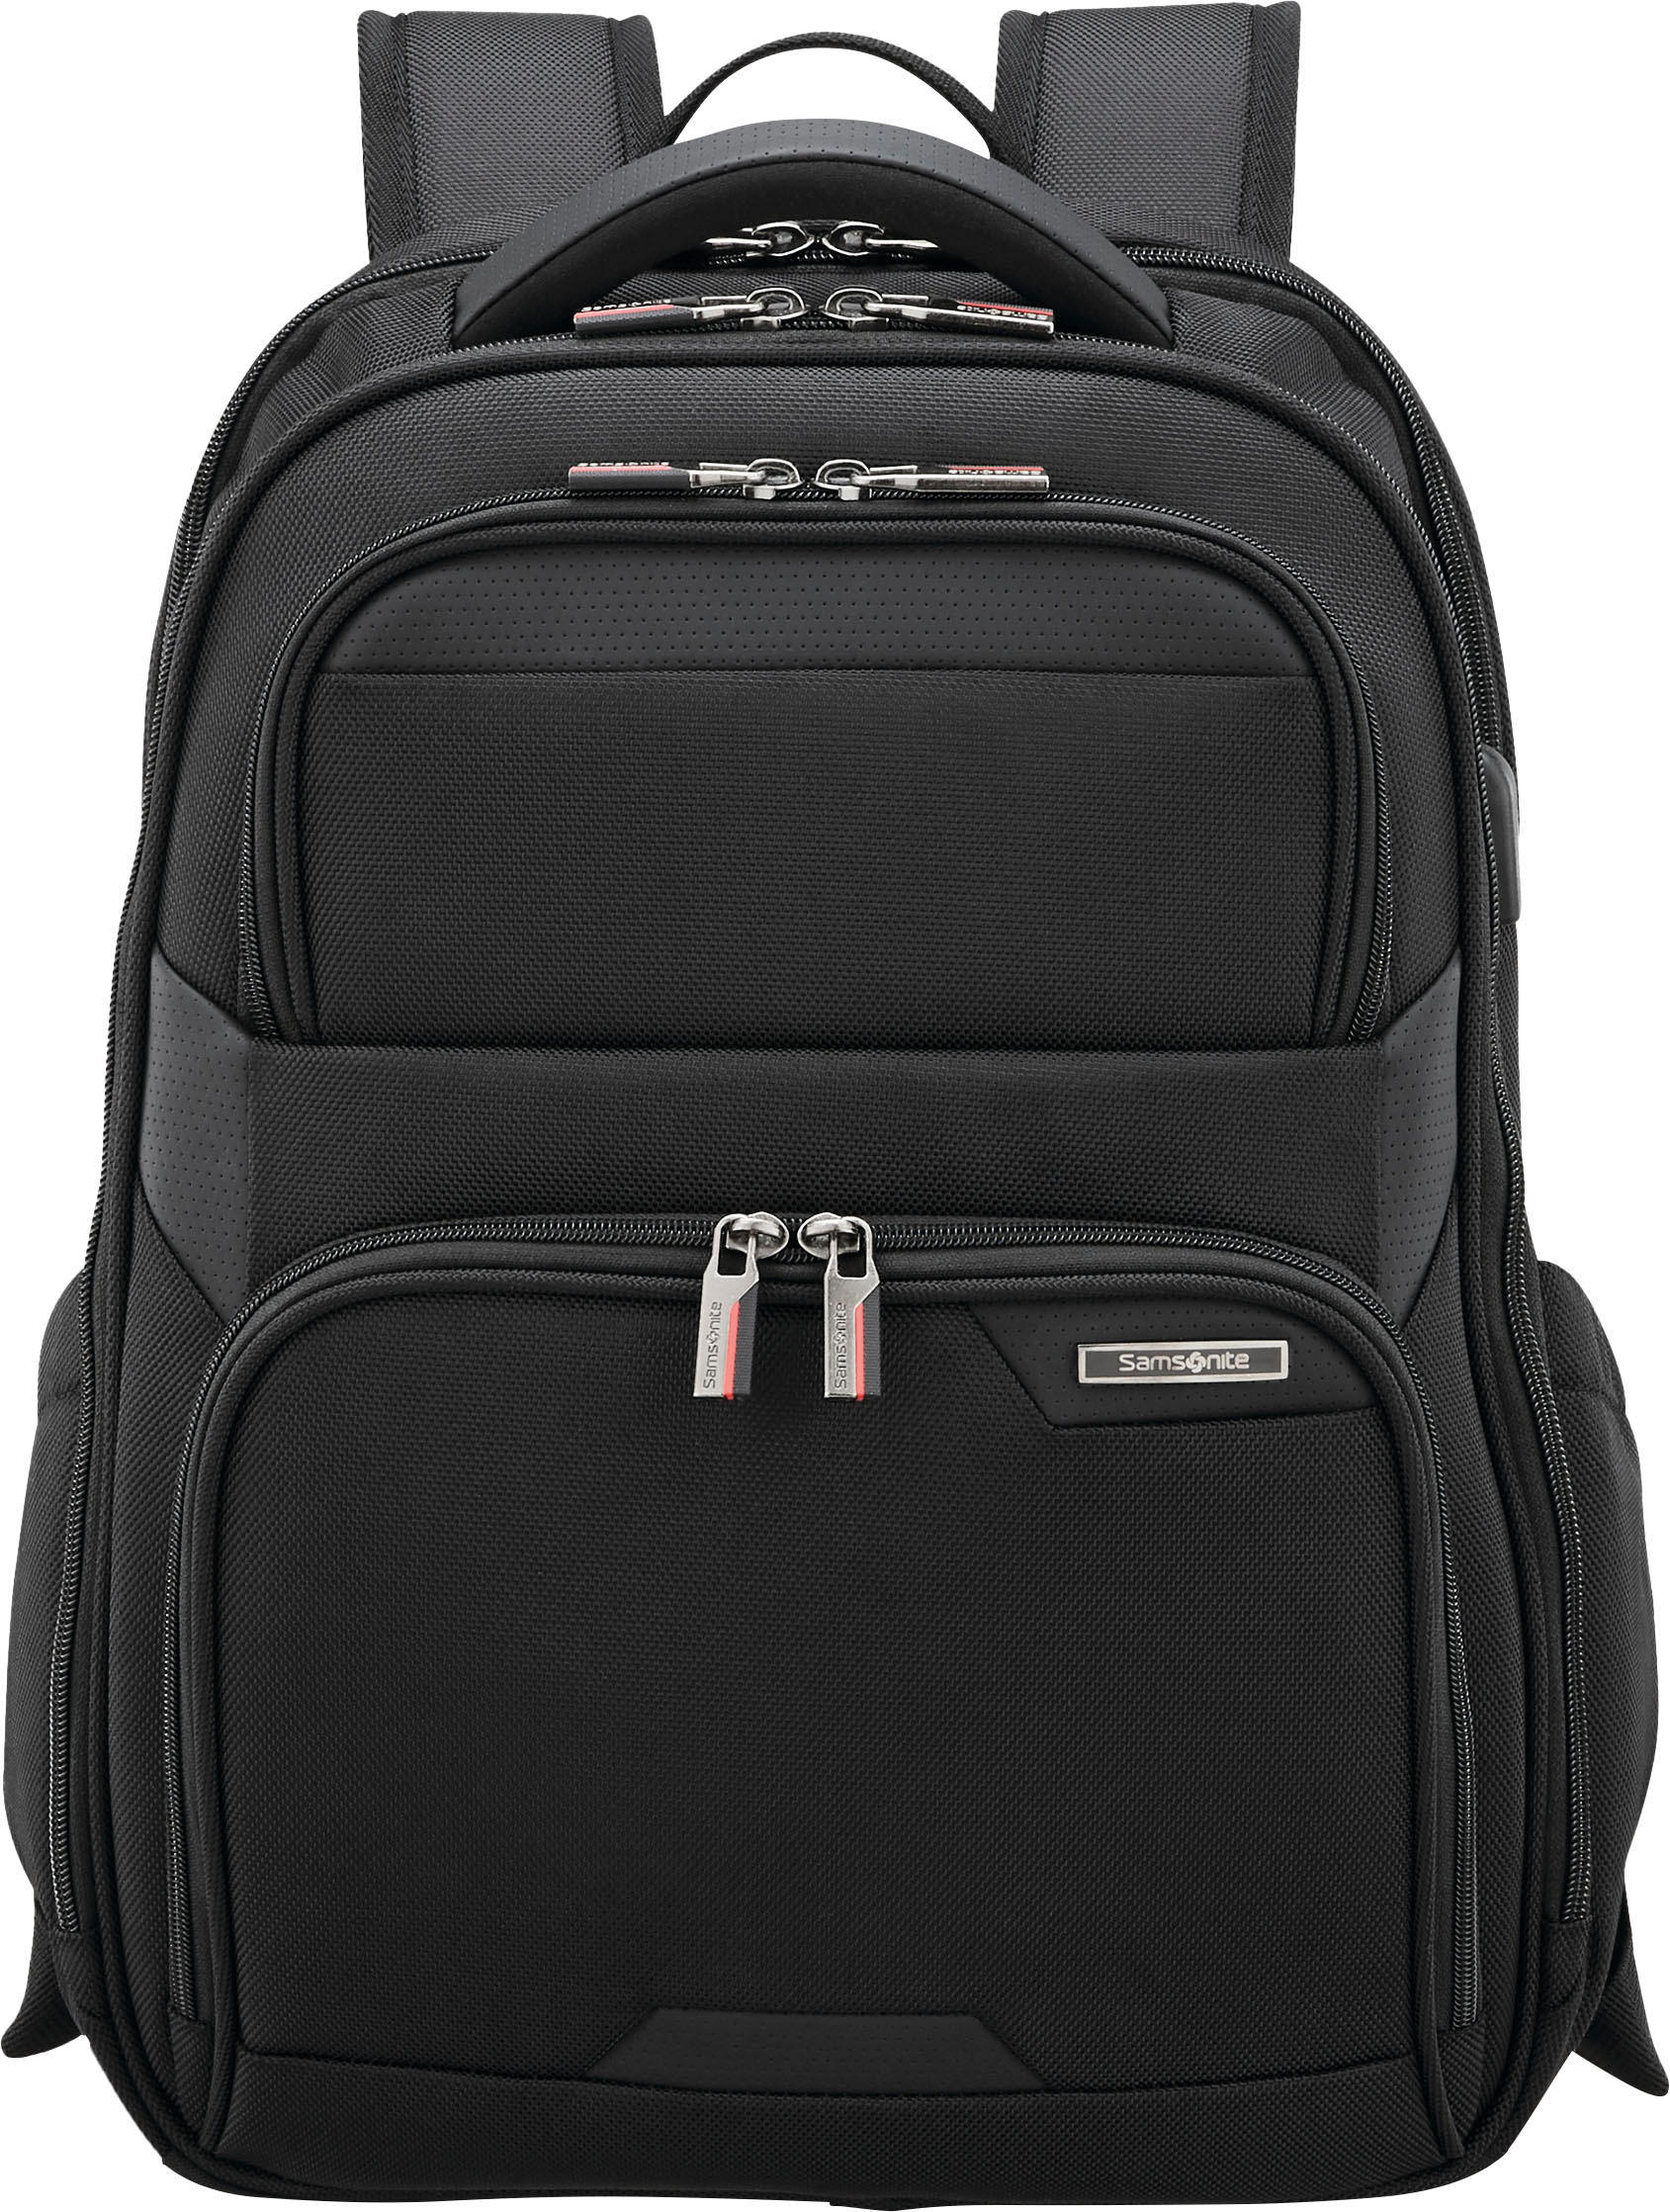 Samsonite Laser Pro 2 Laptop Backpack for 15.6 Laptops Black 139926-1041 -  Best Buy